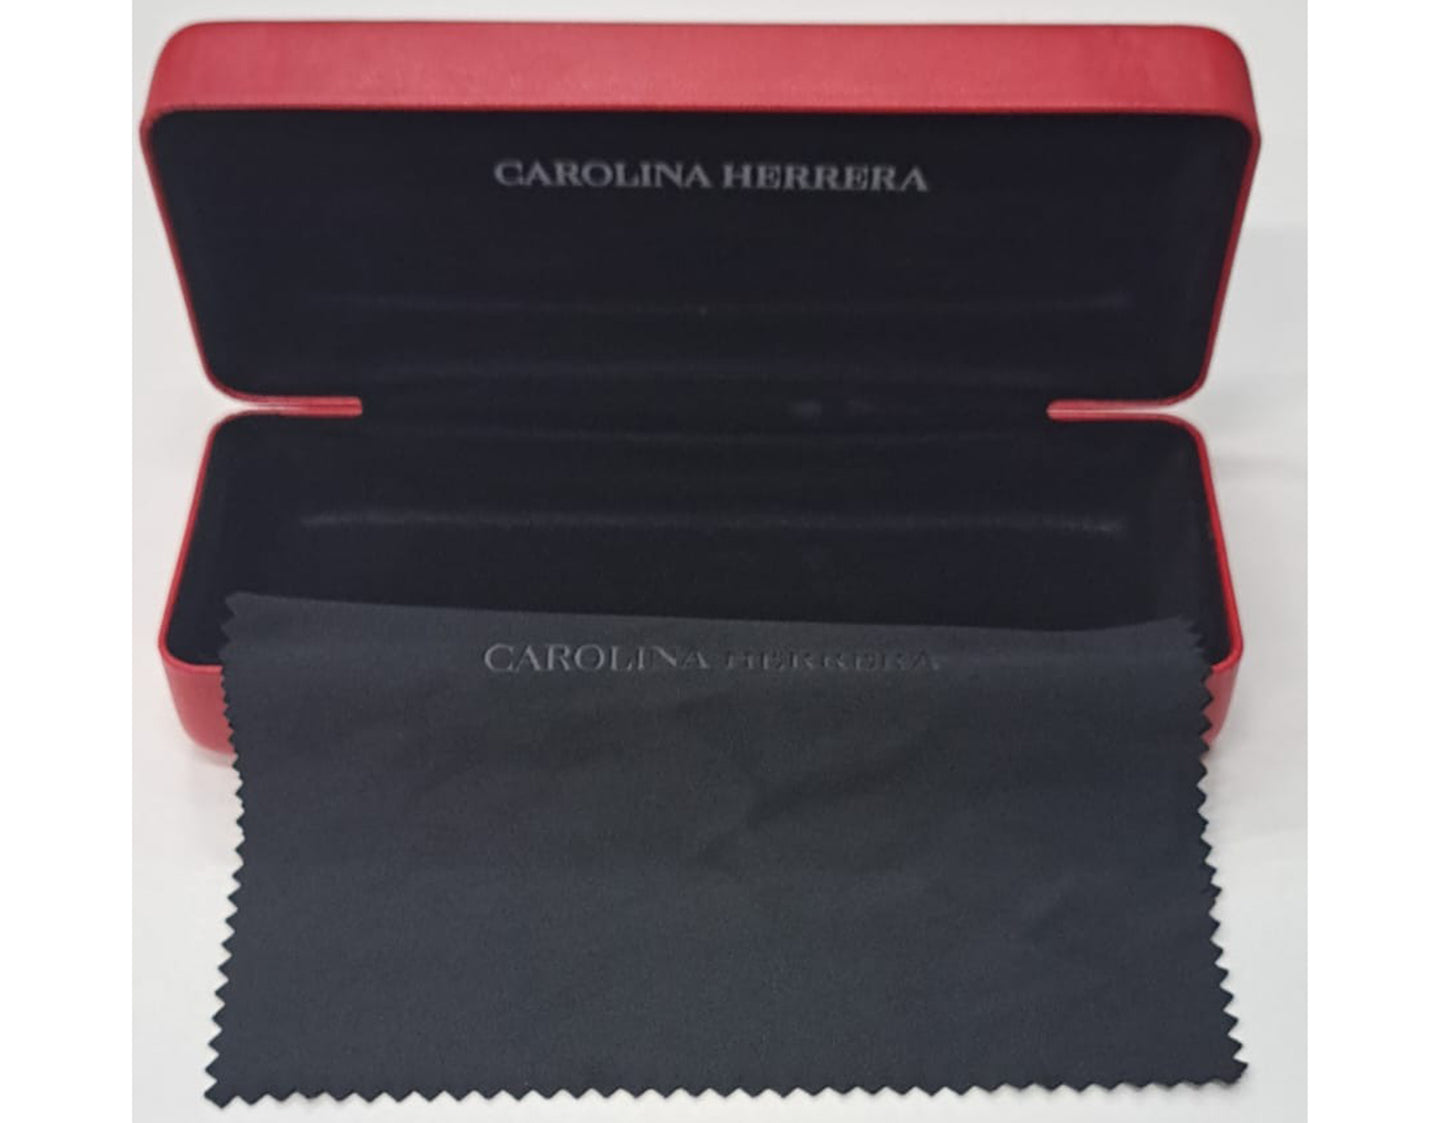 Carolina Herrera VHE773-0741-54 54mm New Eyeglasses